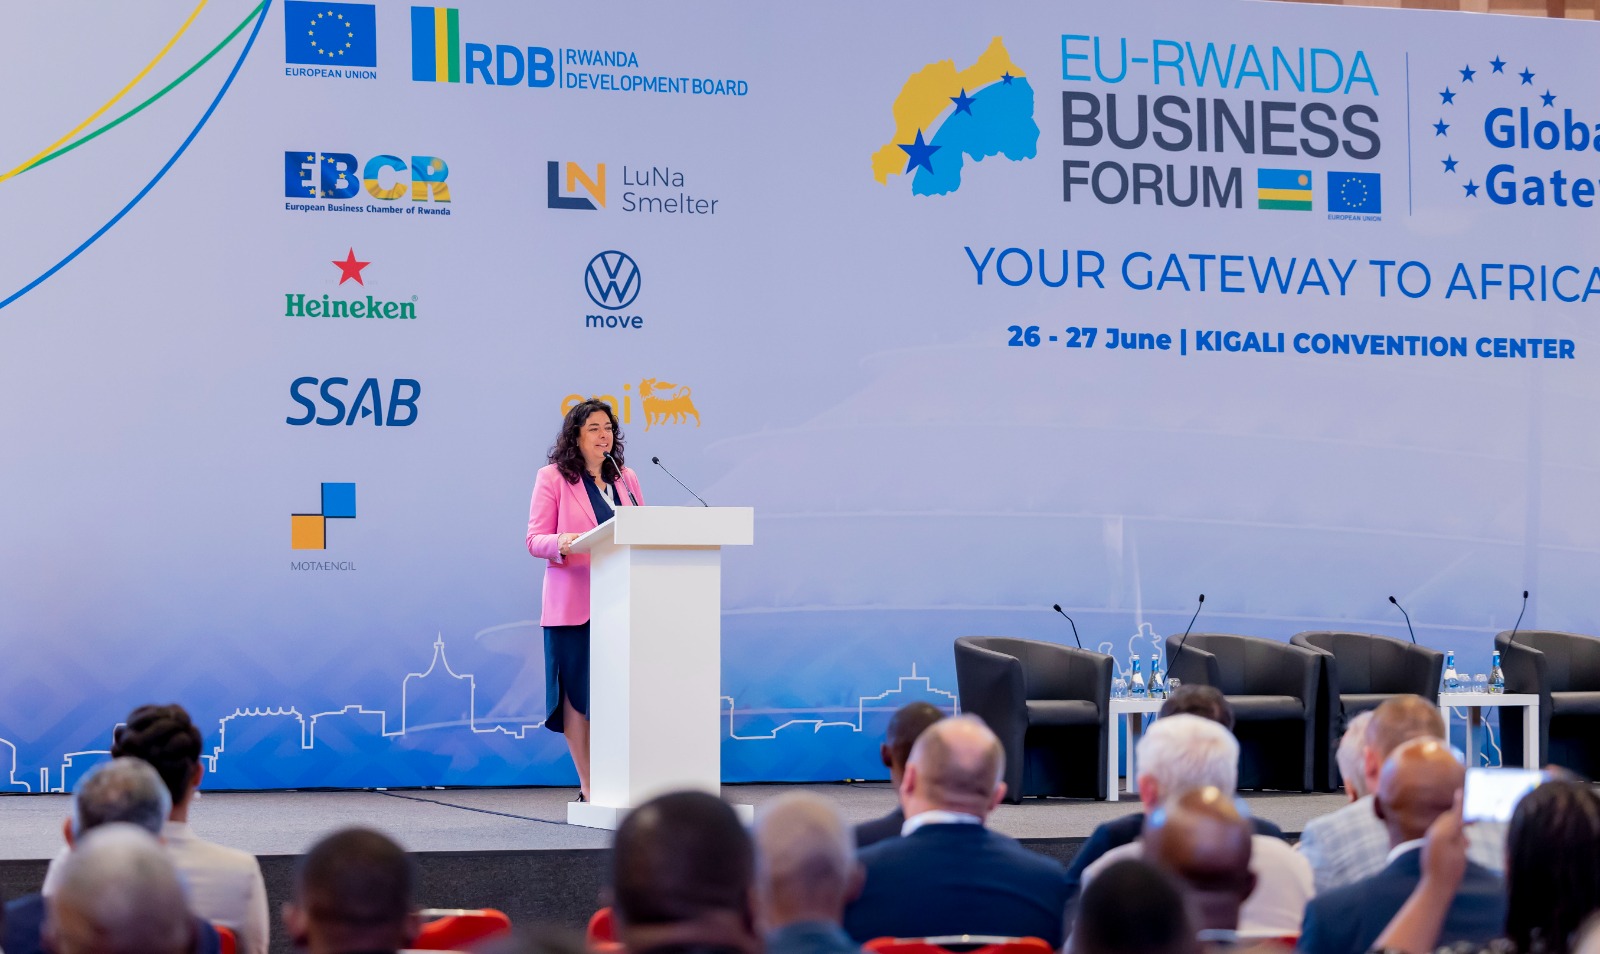 Inaugural EU - Rwanda Business Forum Held in Kigali